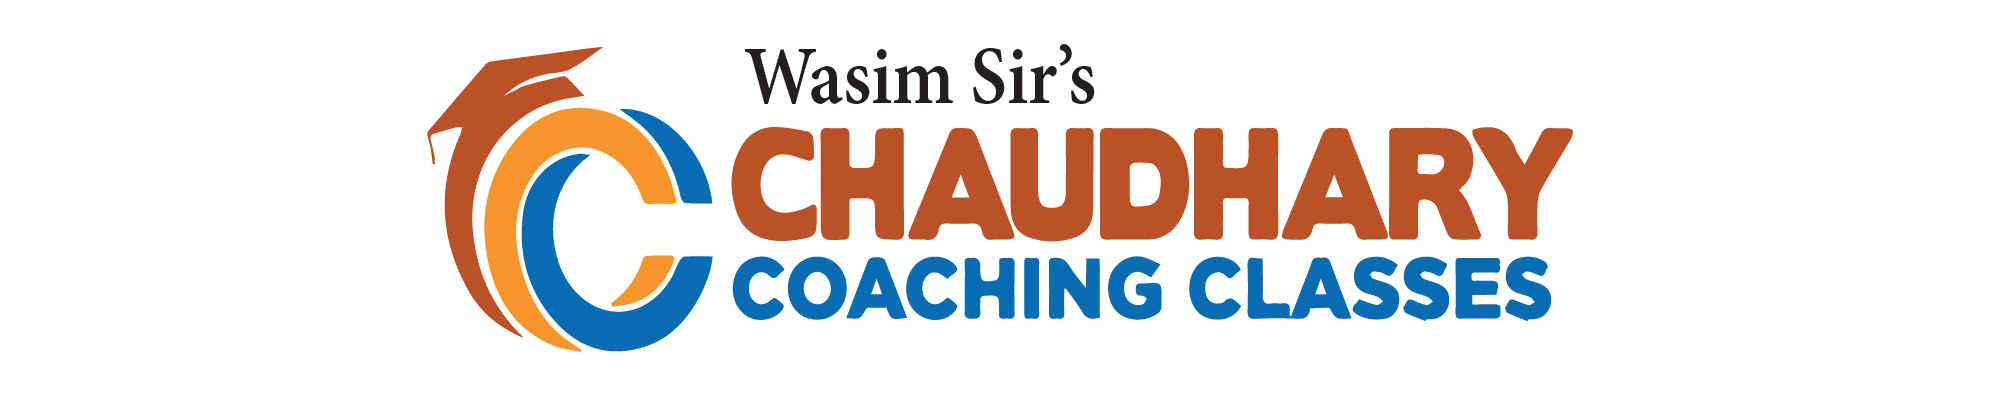 Wasim Sir's Chaudhary Coaching Classes|Schools|Education